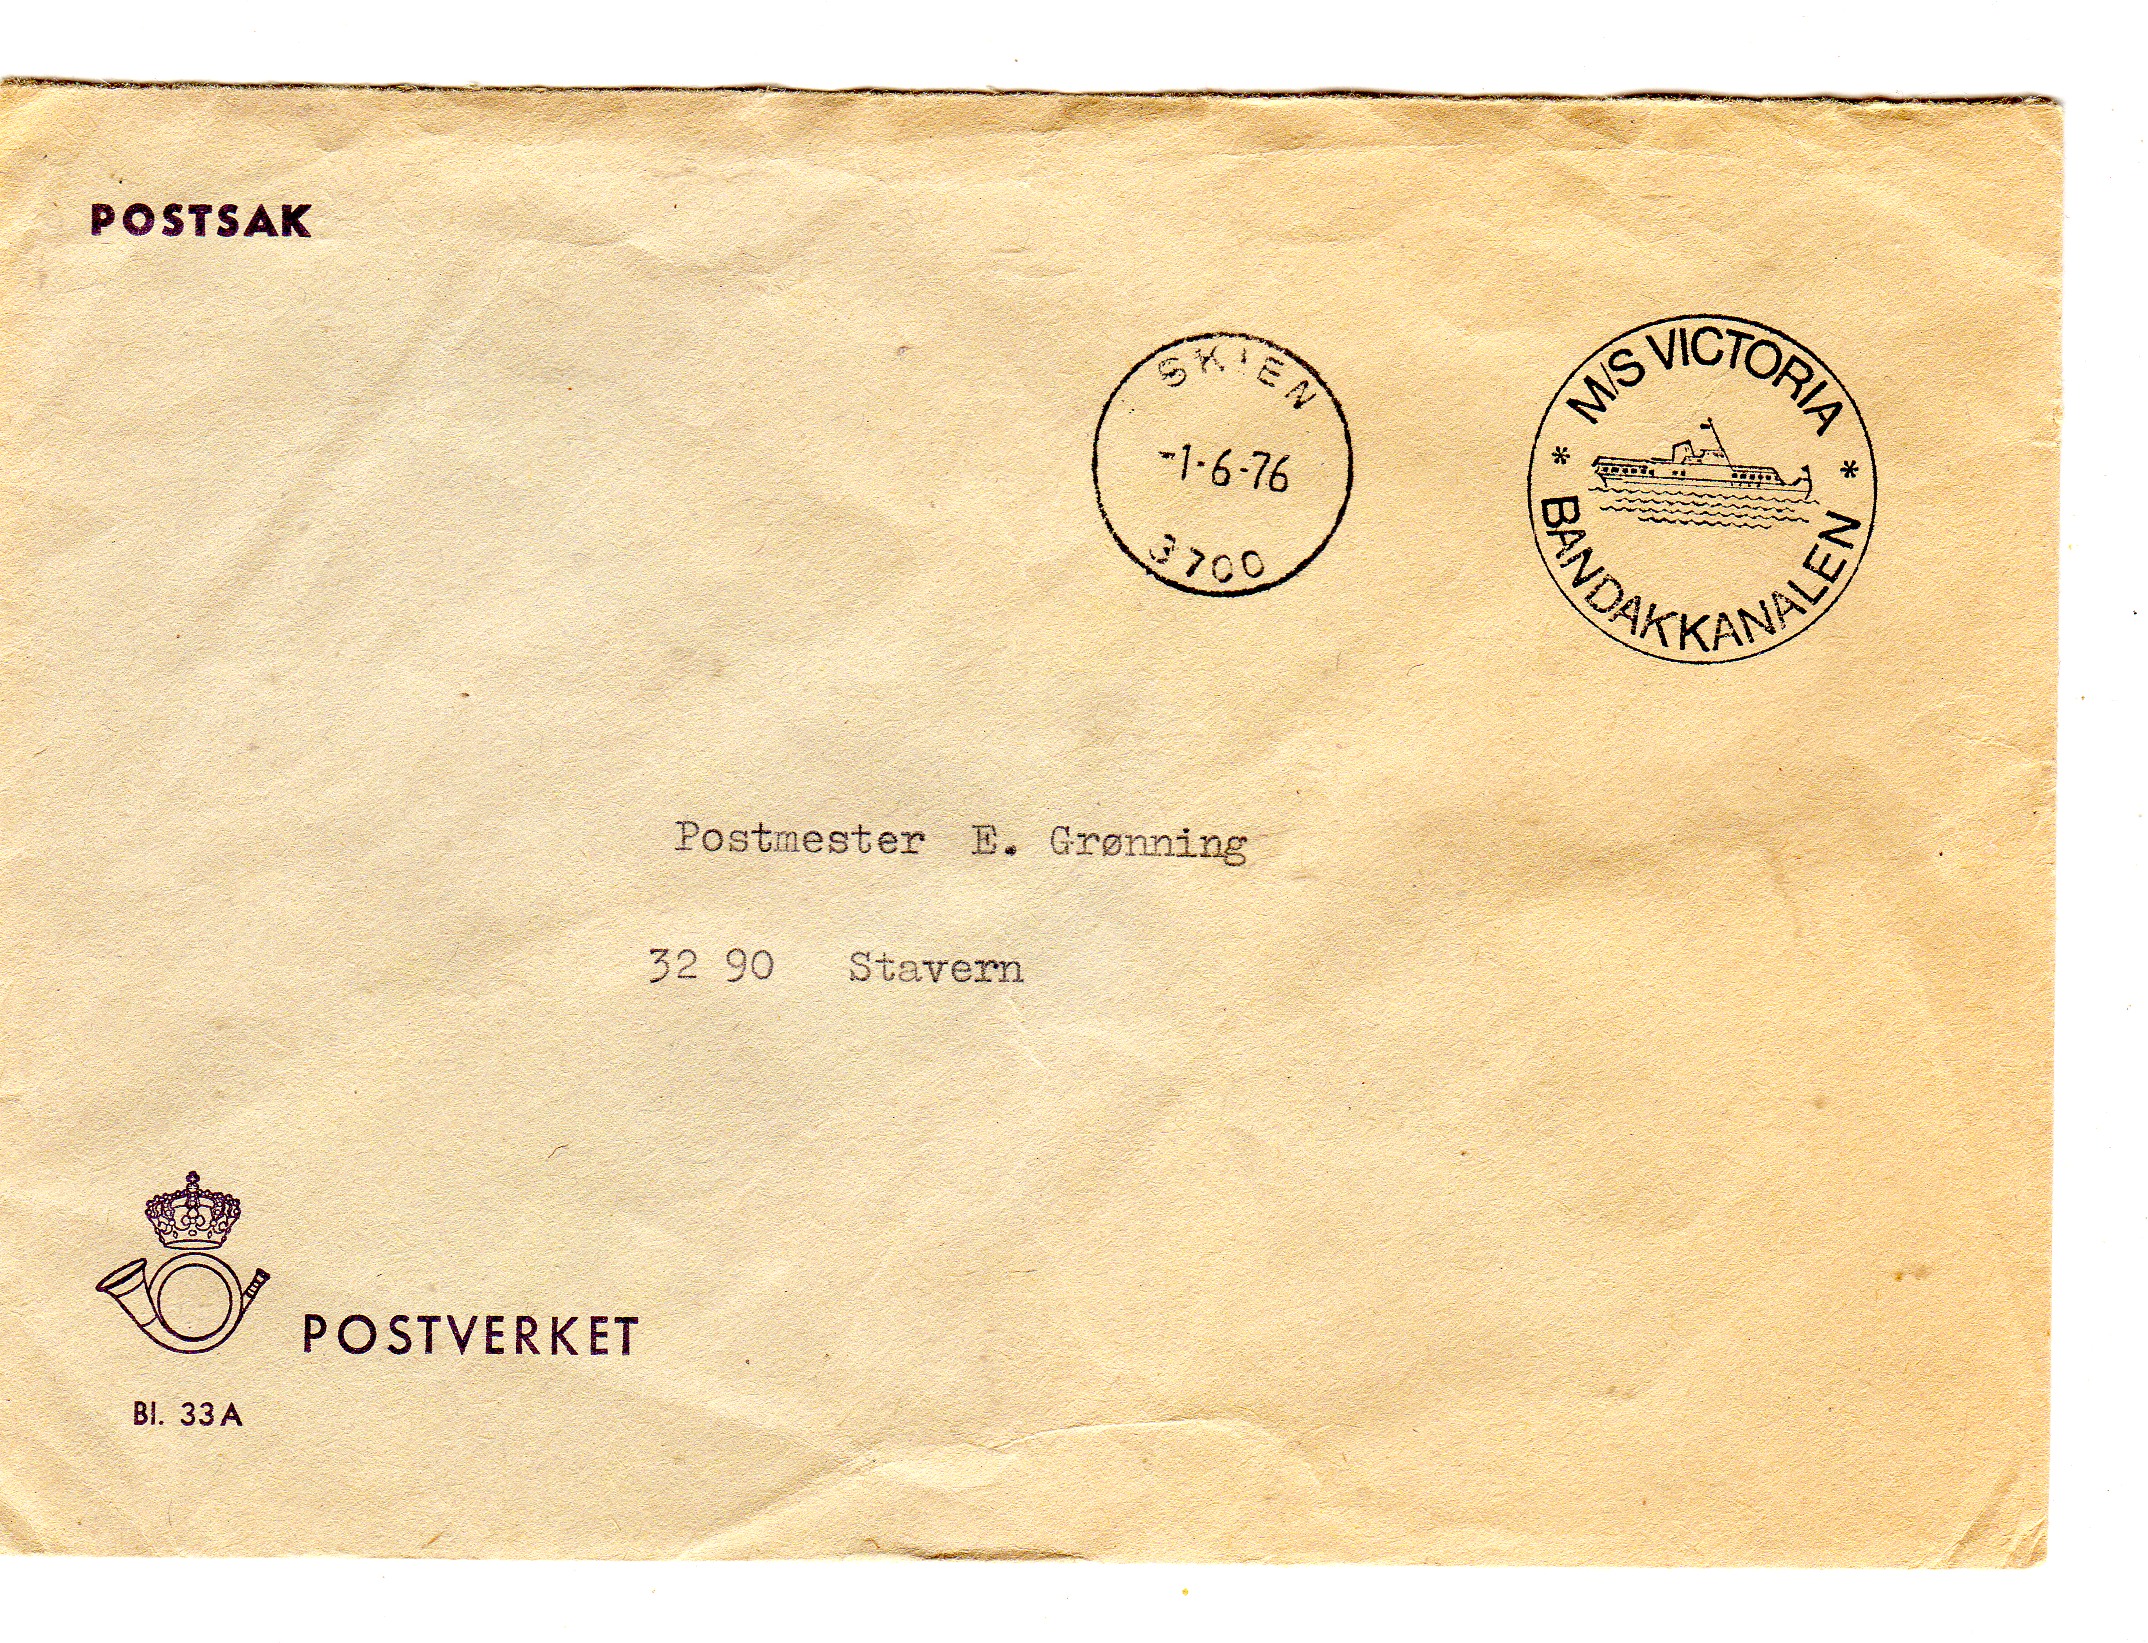 M/S Victoria Postverket 1976